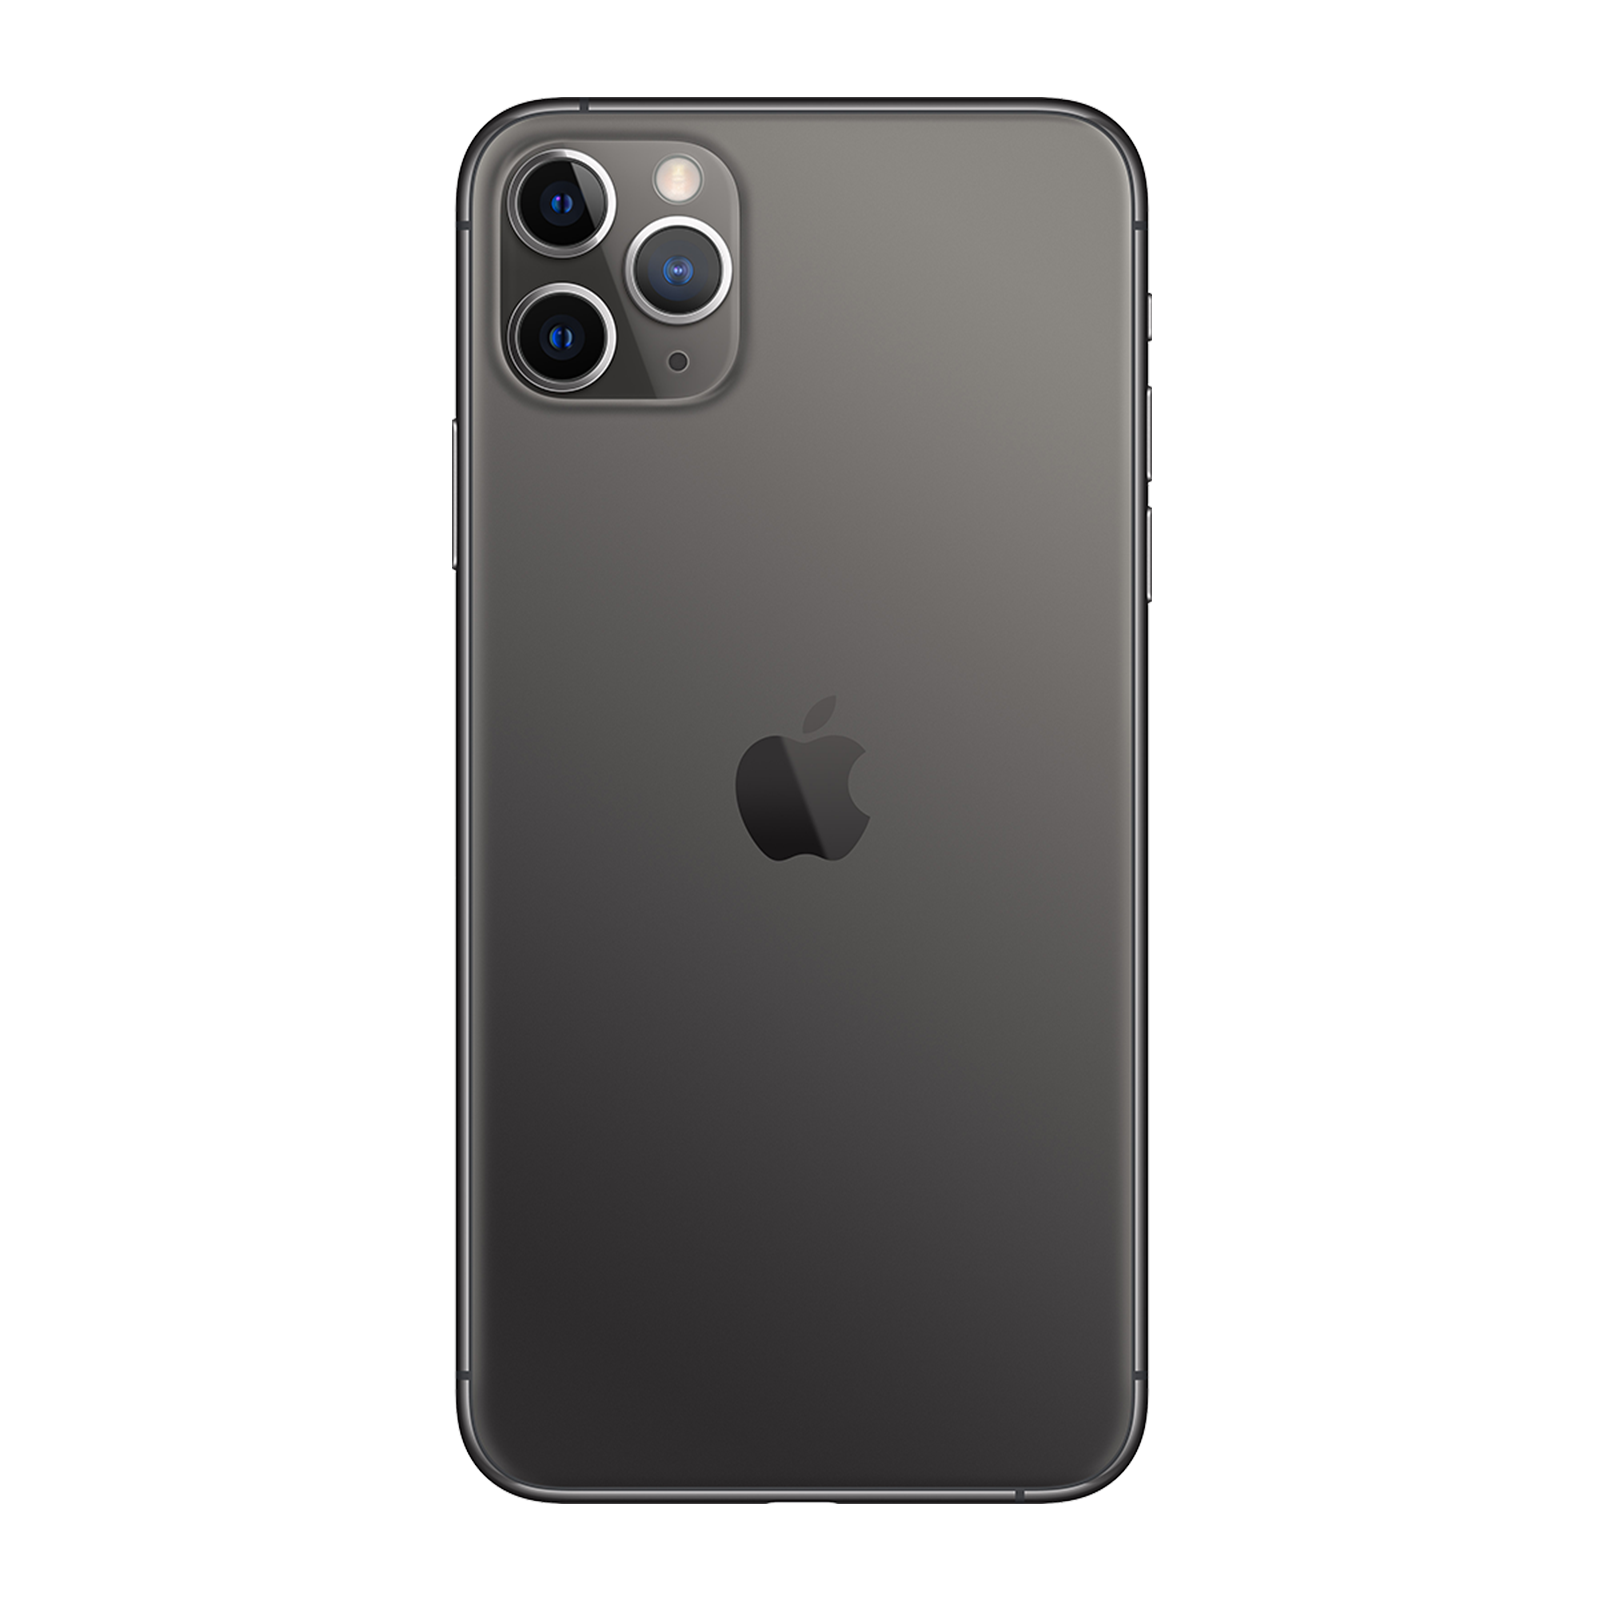 iPhone 11 Pro 256GB Space Grey Pristine Unlocked - New Battery